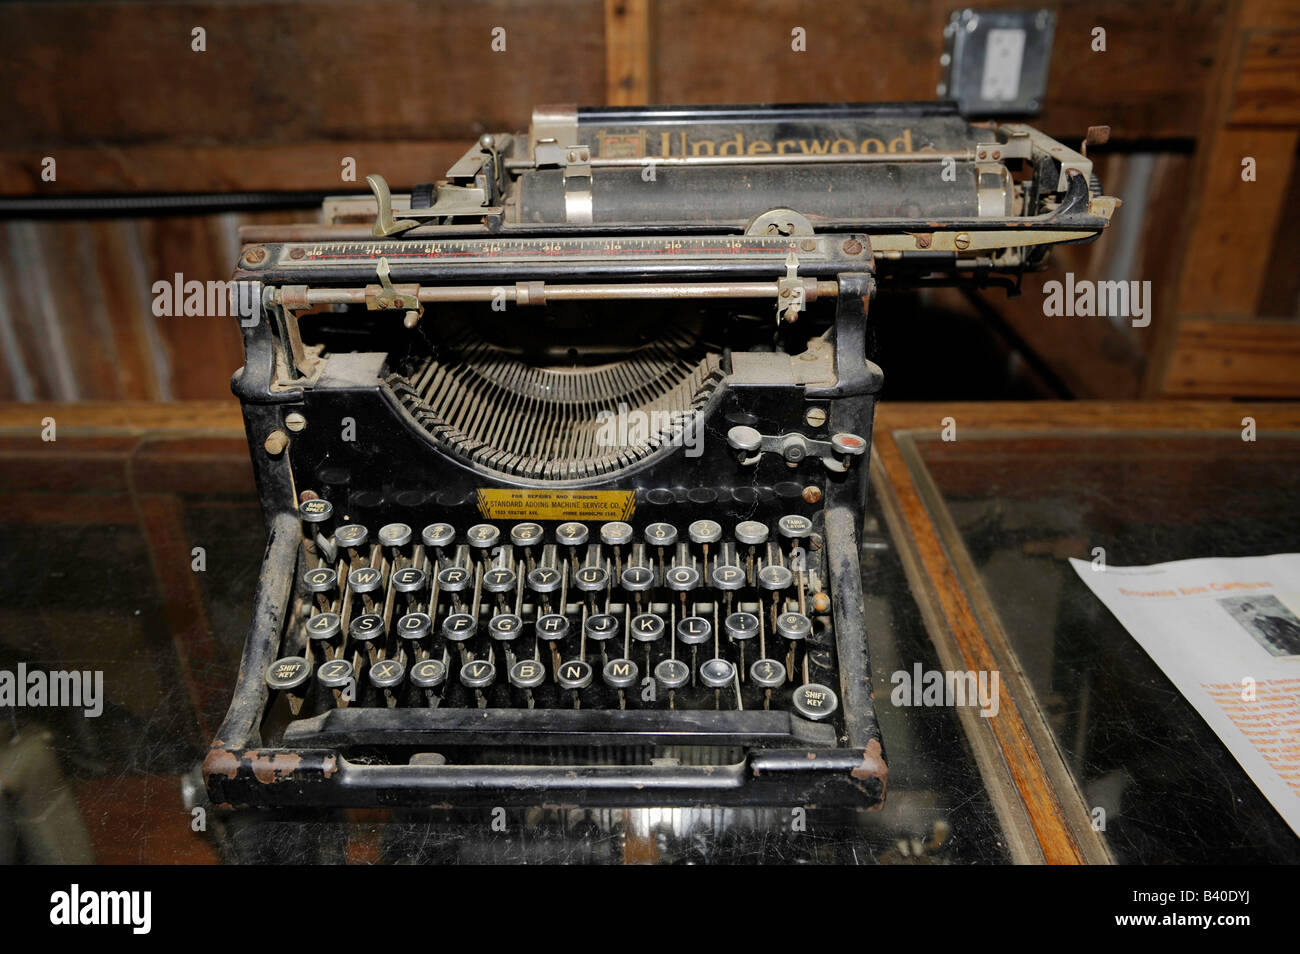 Old vintage circa 1930 Underwood typewriter Foto de stock